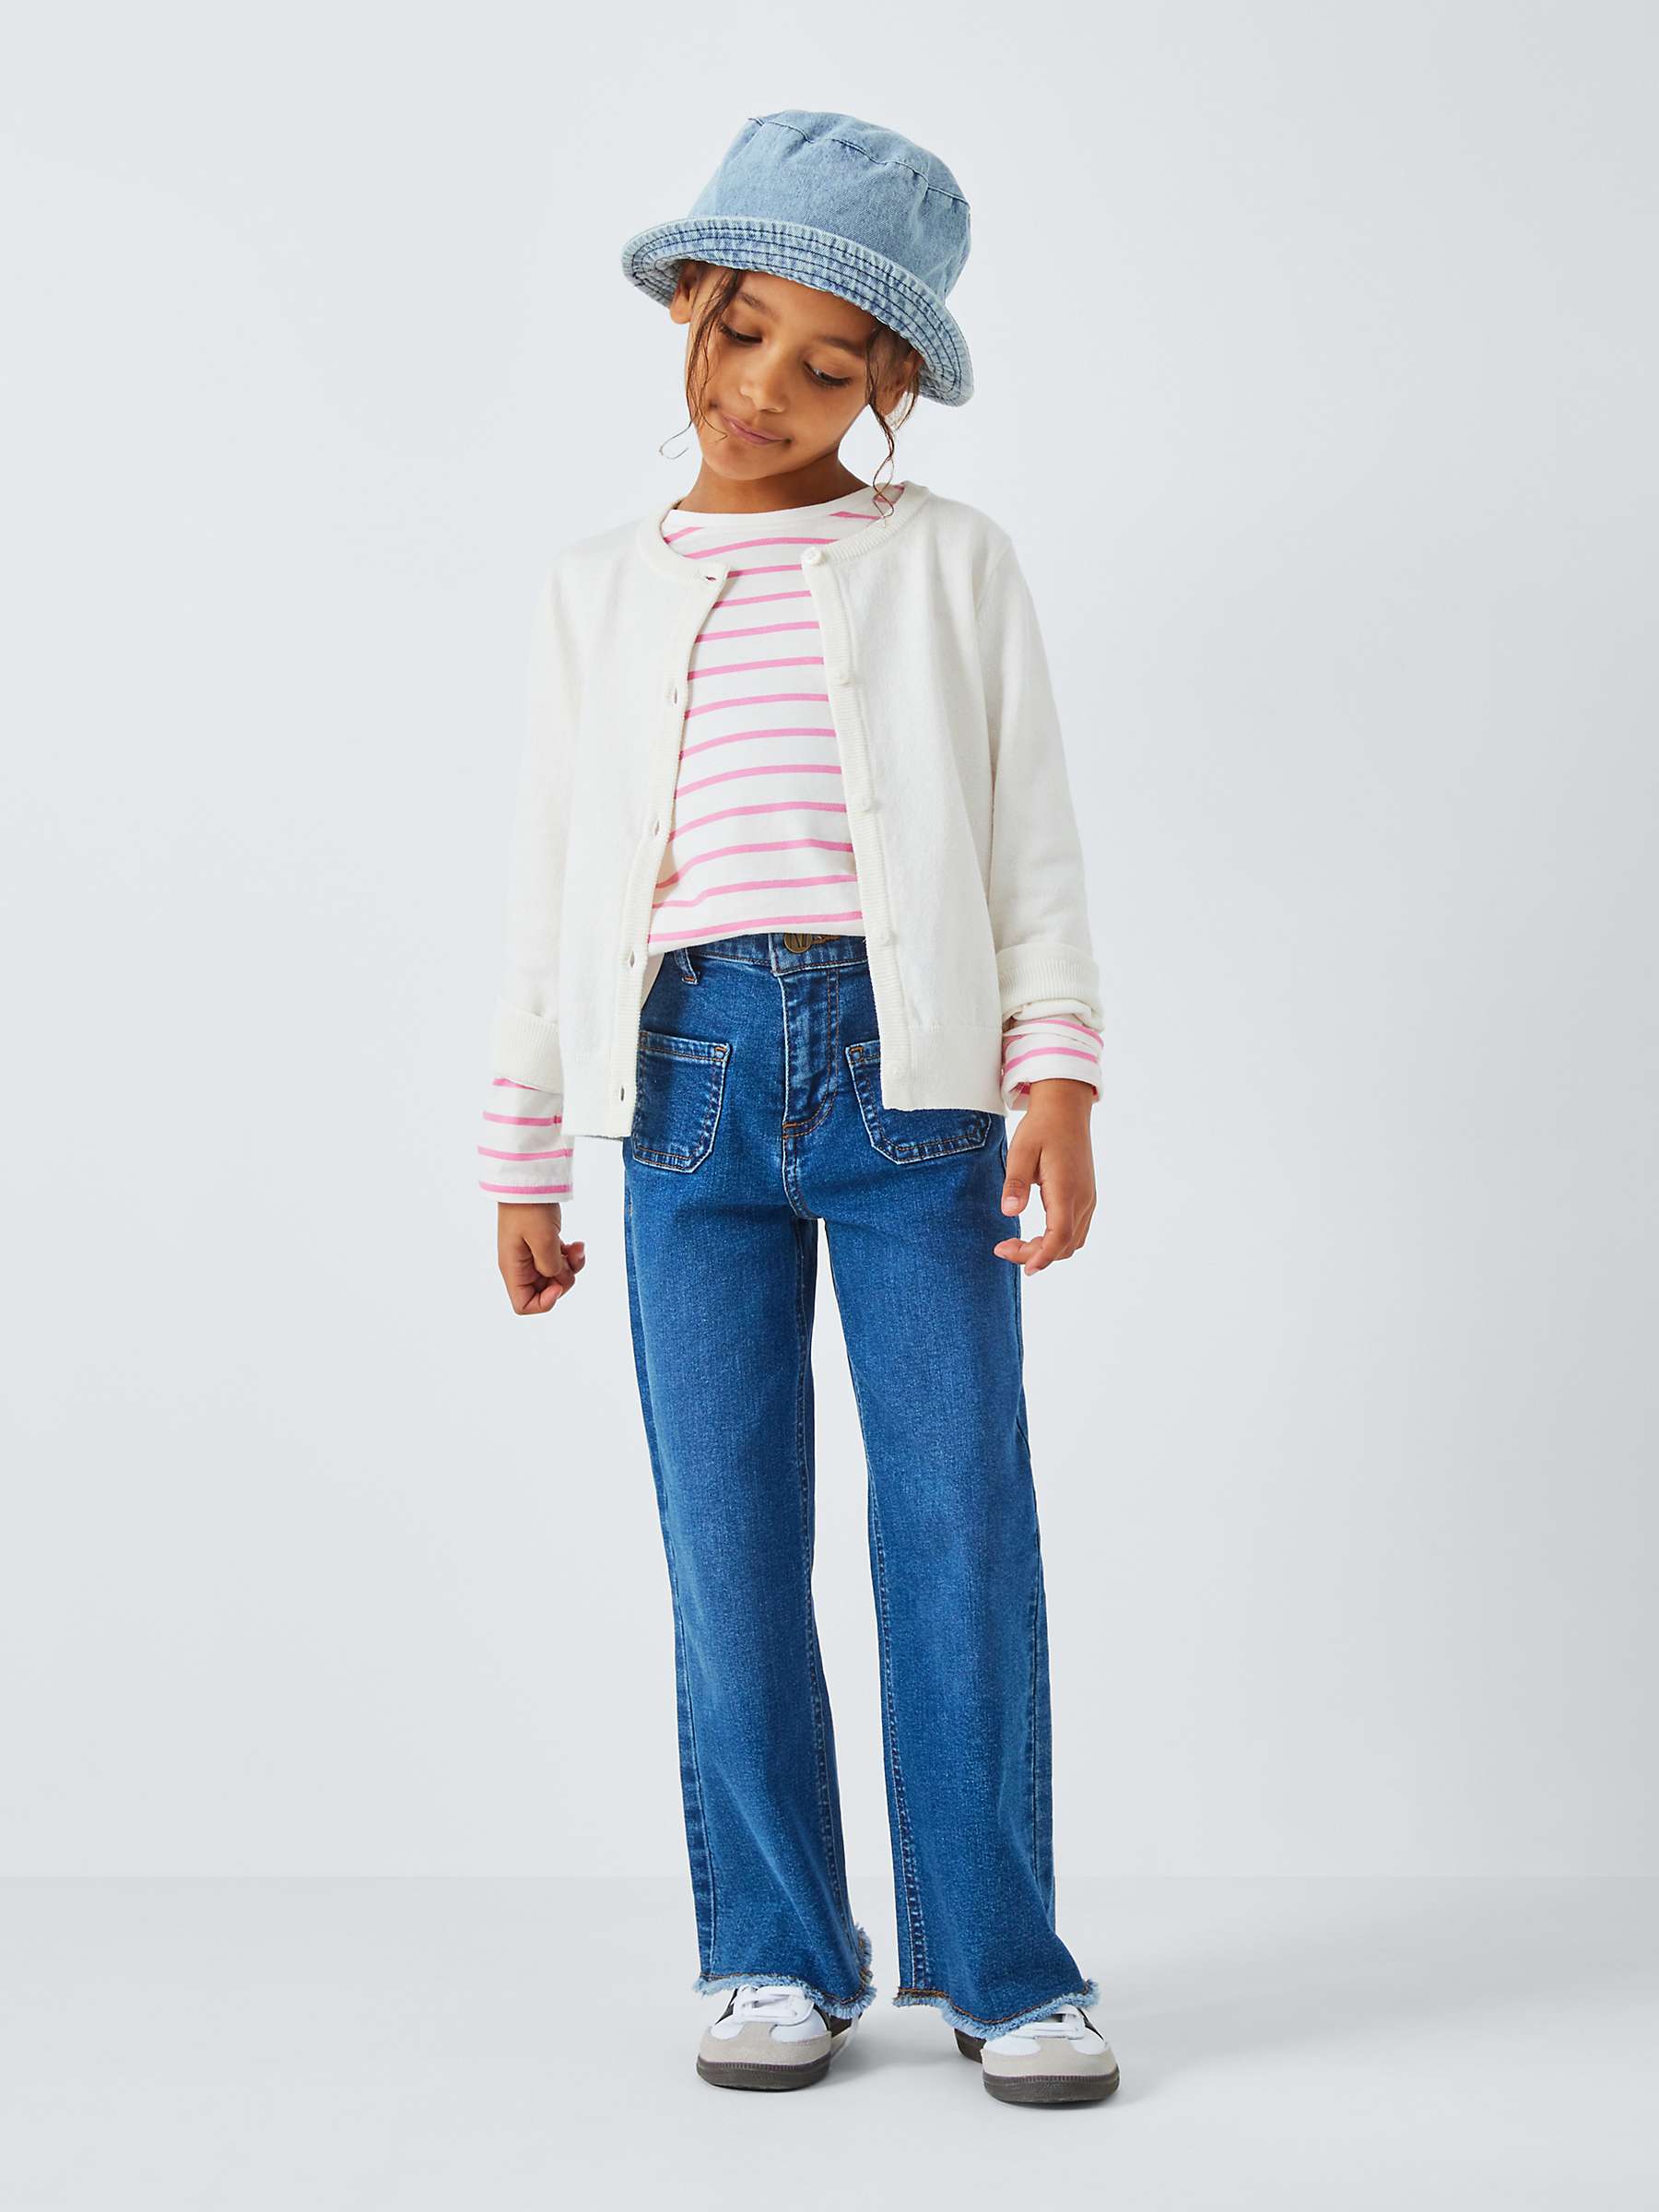 Buy John Lewis Kids' Flower/Stripe Long Sleeve T-Shirt, Pack of 3, Pink/Multi Online at johnlewis.com